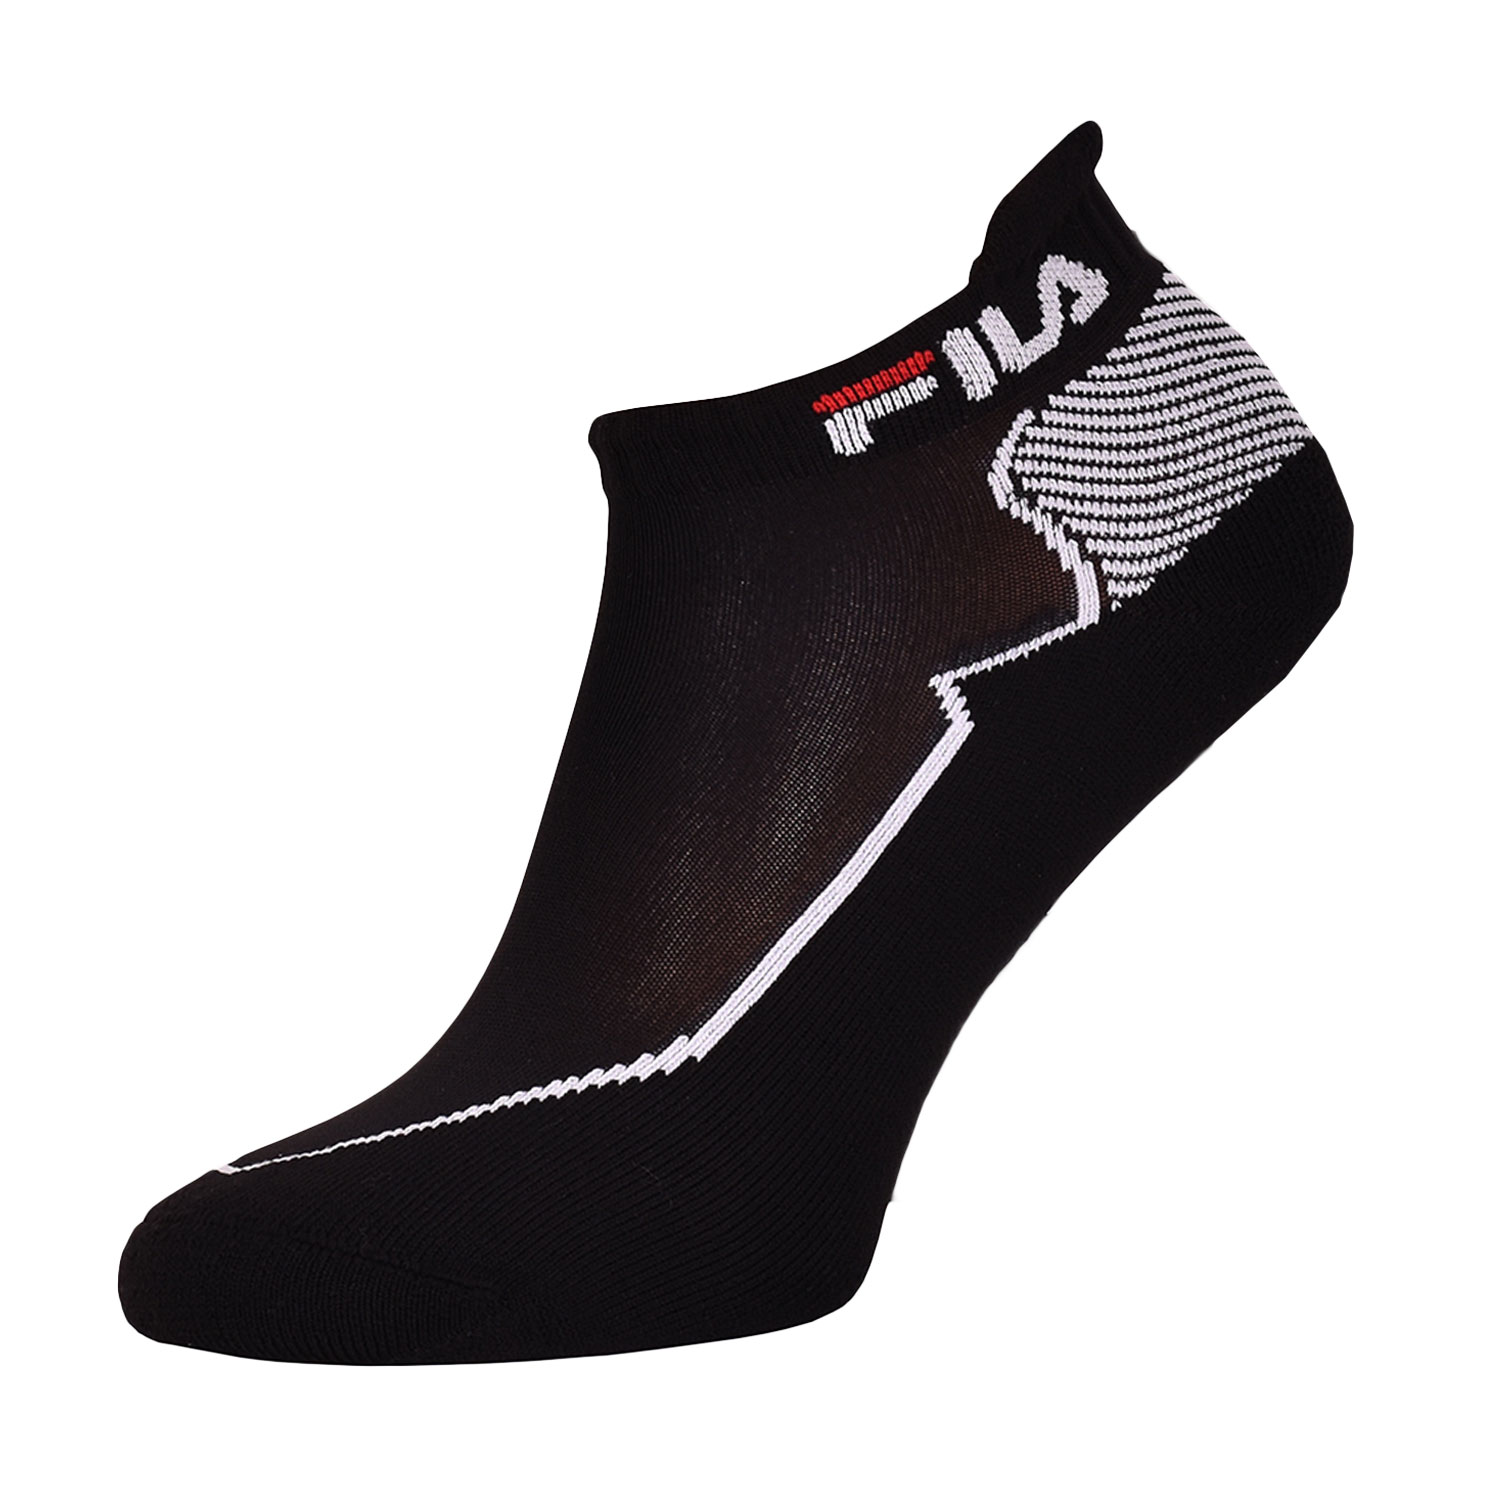 Fila Pro Socks - Black